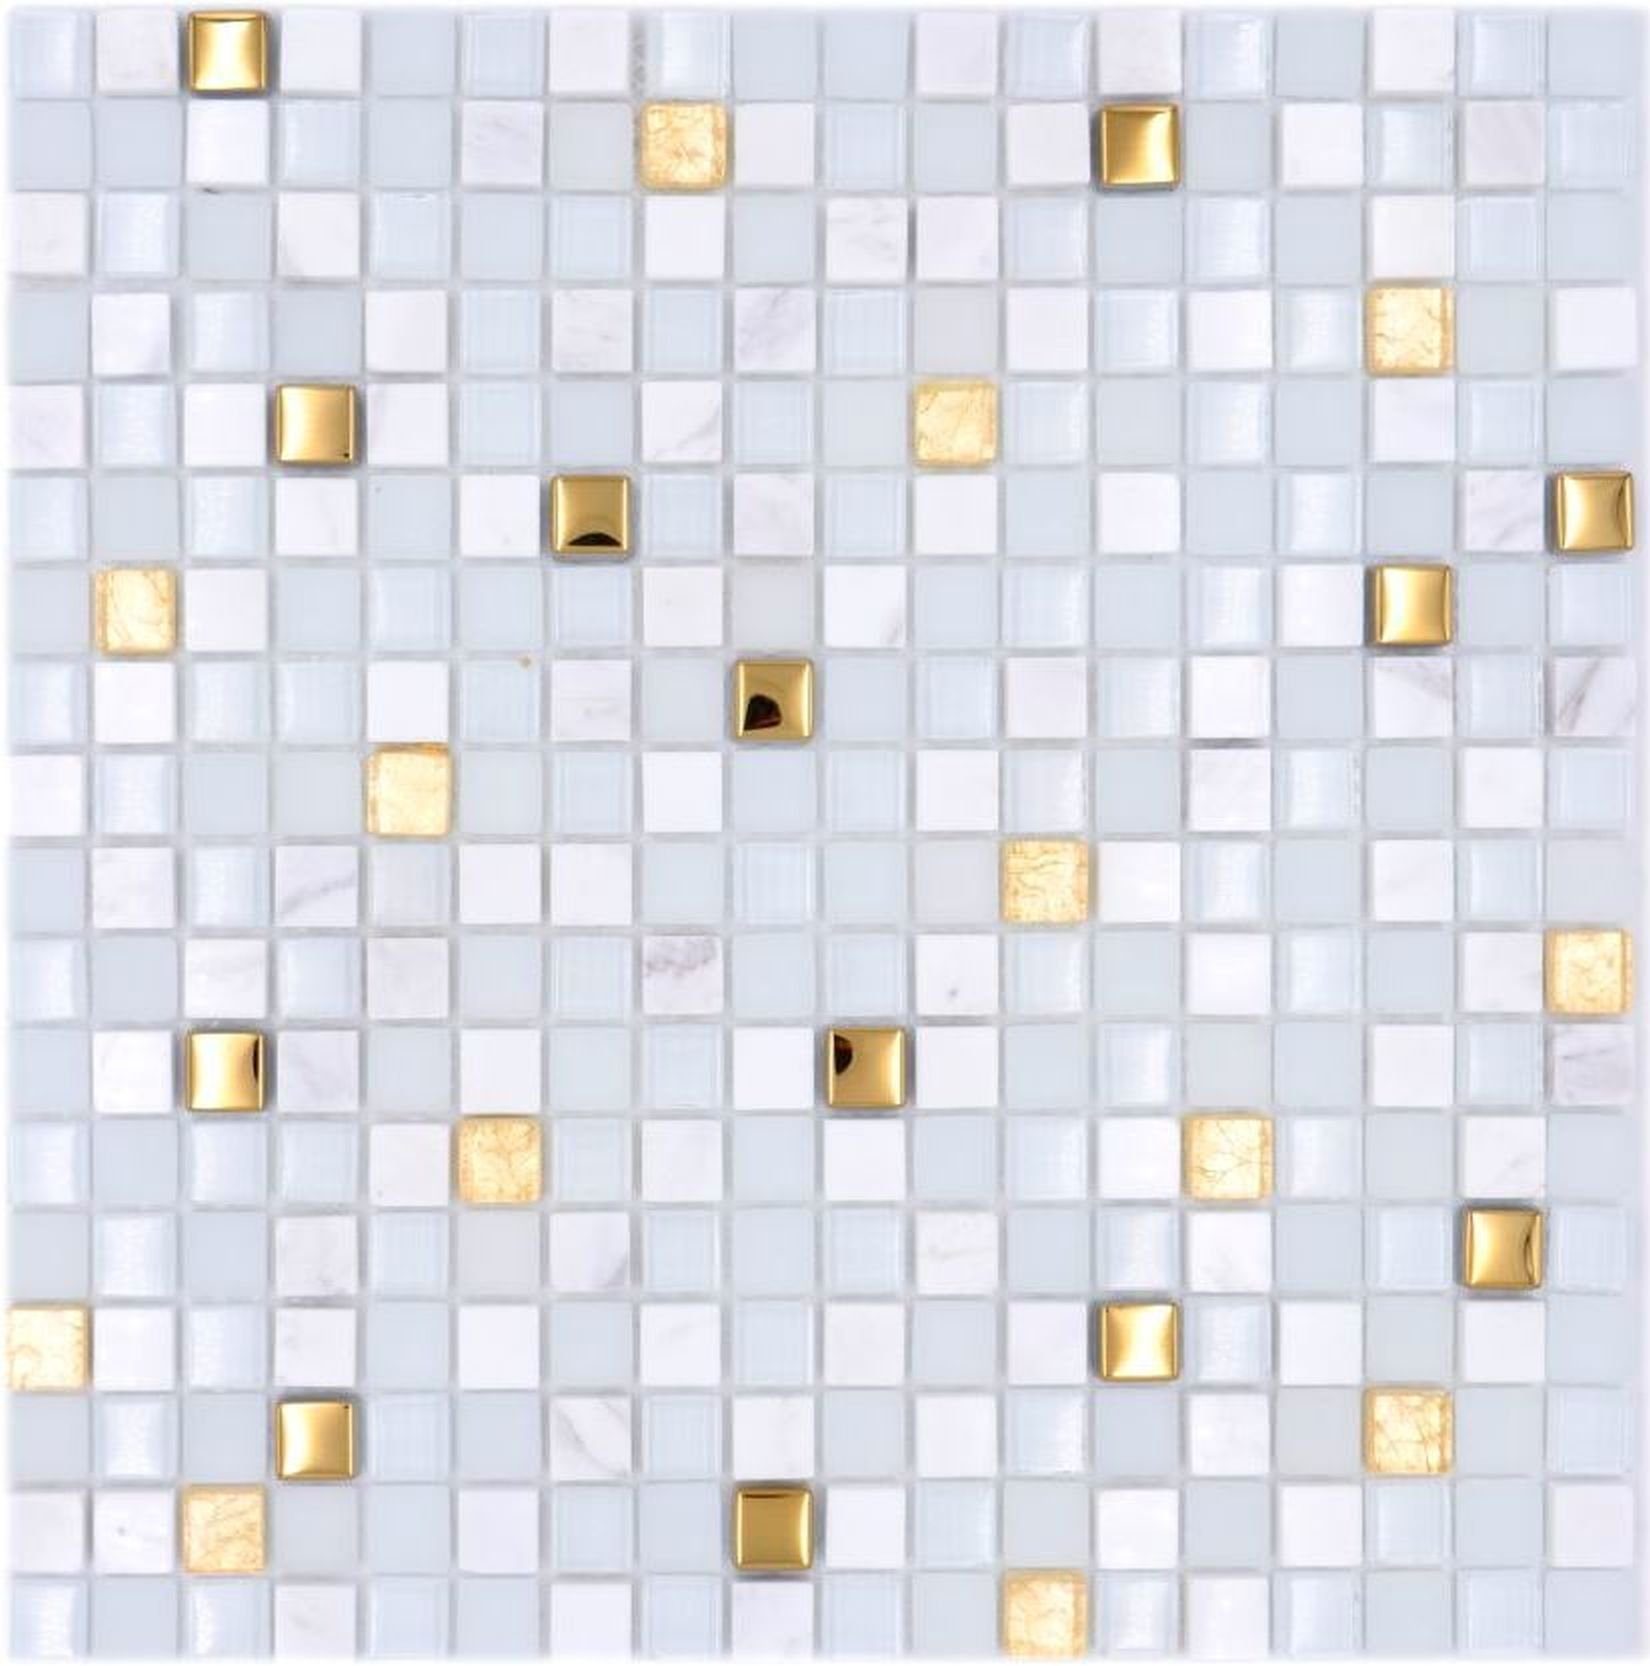 Mosani Mosaikfliesen Glasmosaik Naturstein Mosaikfliese weiß gold